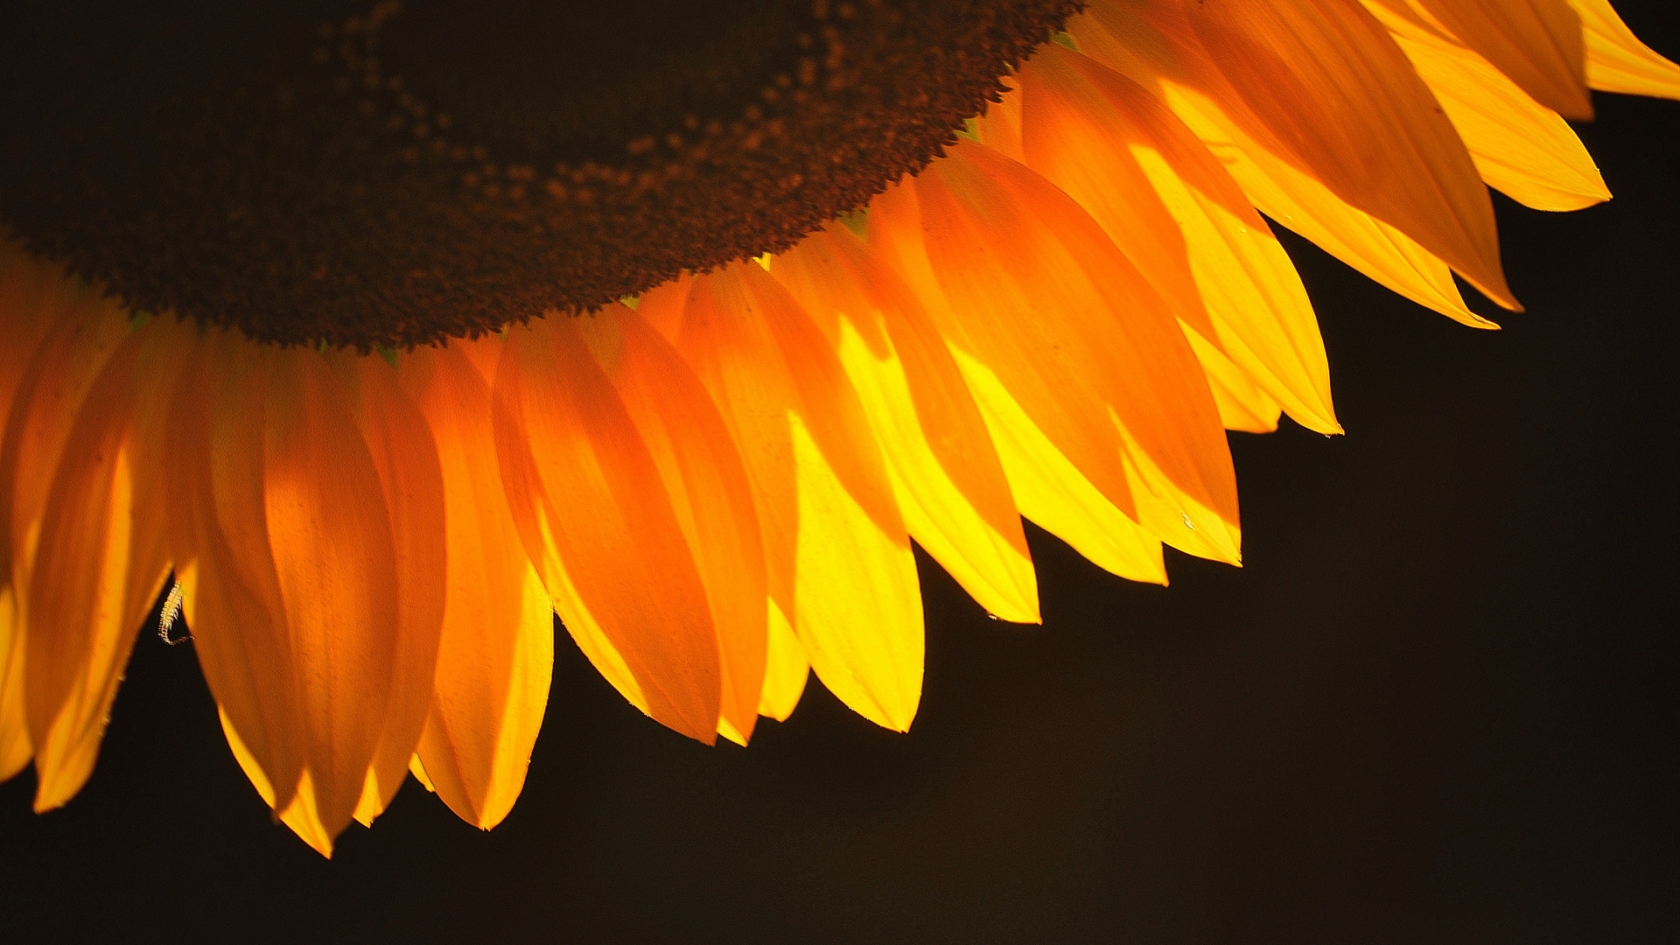 Sunflower Petals for 1680 x 945 HDTV resolution